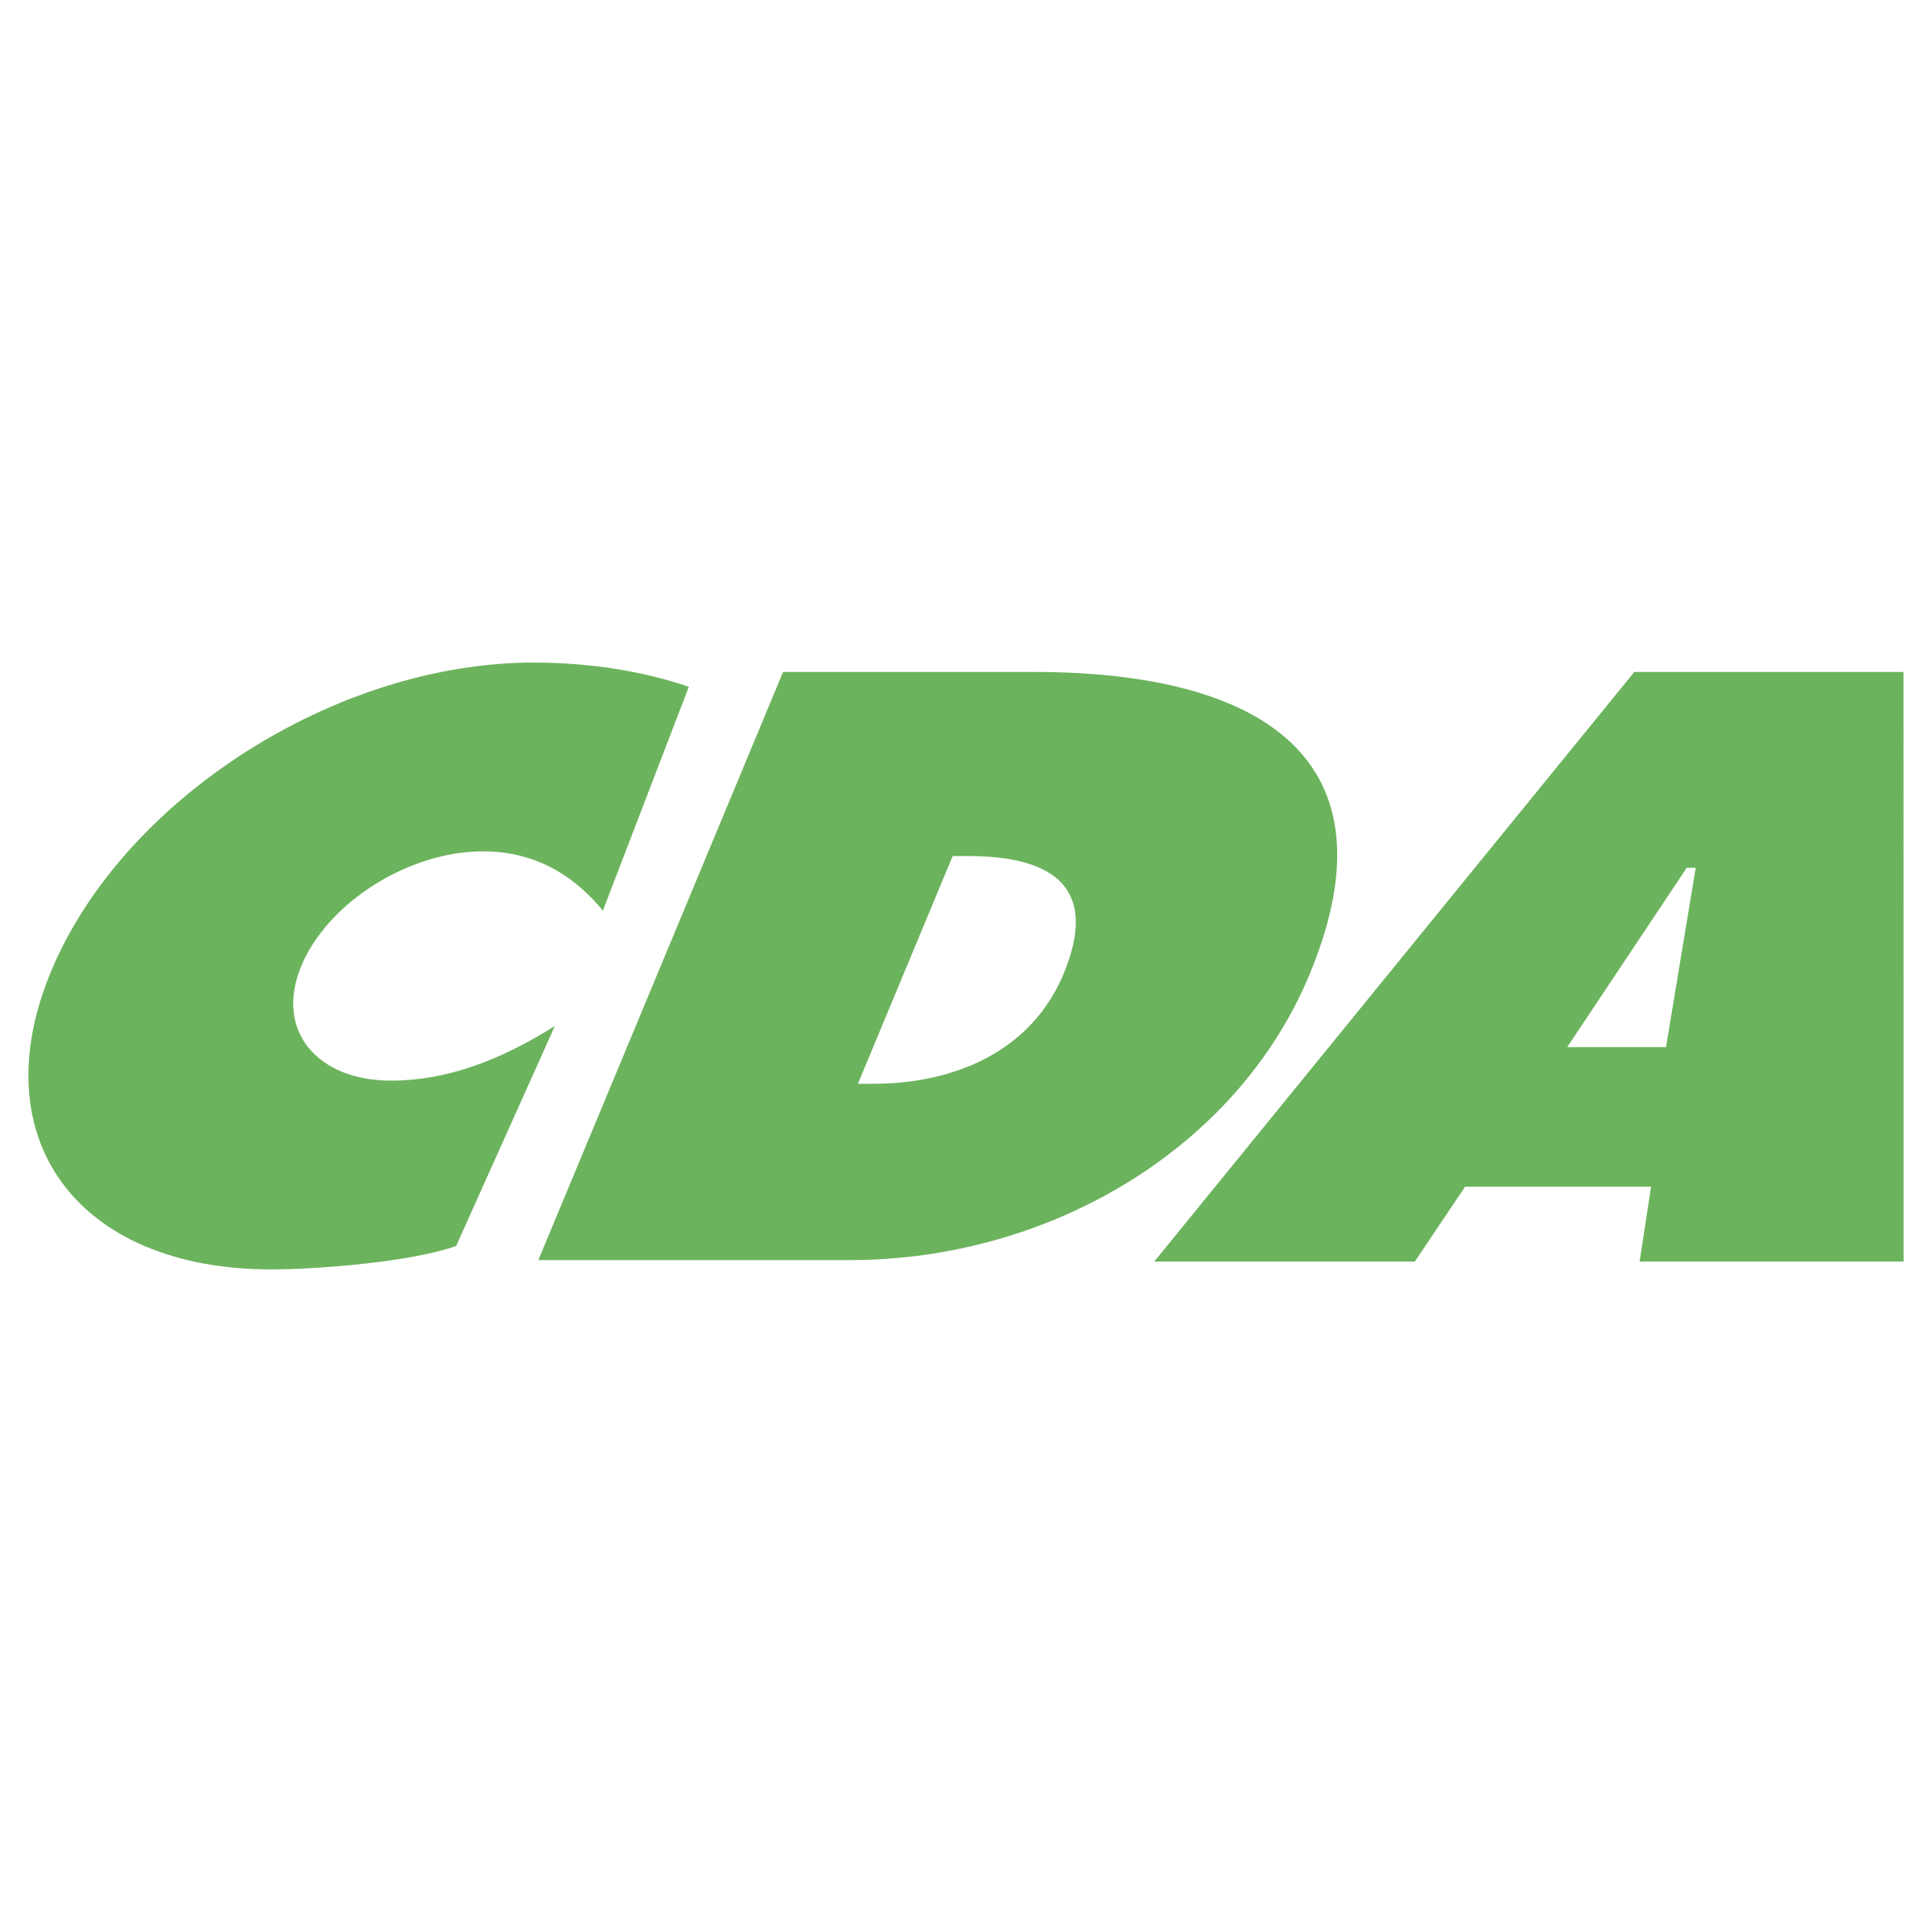 CDA Logo - CDA Logo PNG Transparent & SVG Vector - Freebie Supply